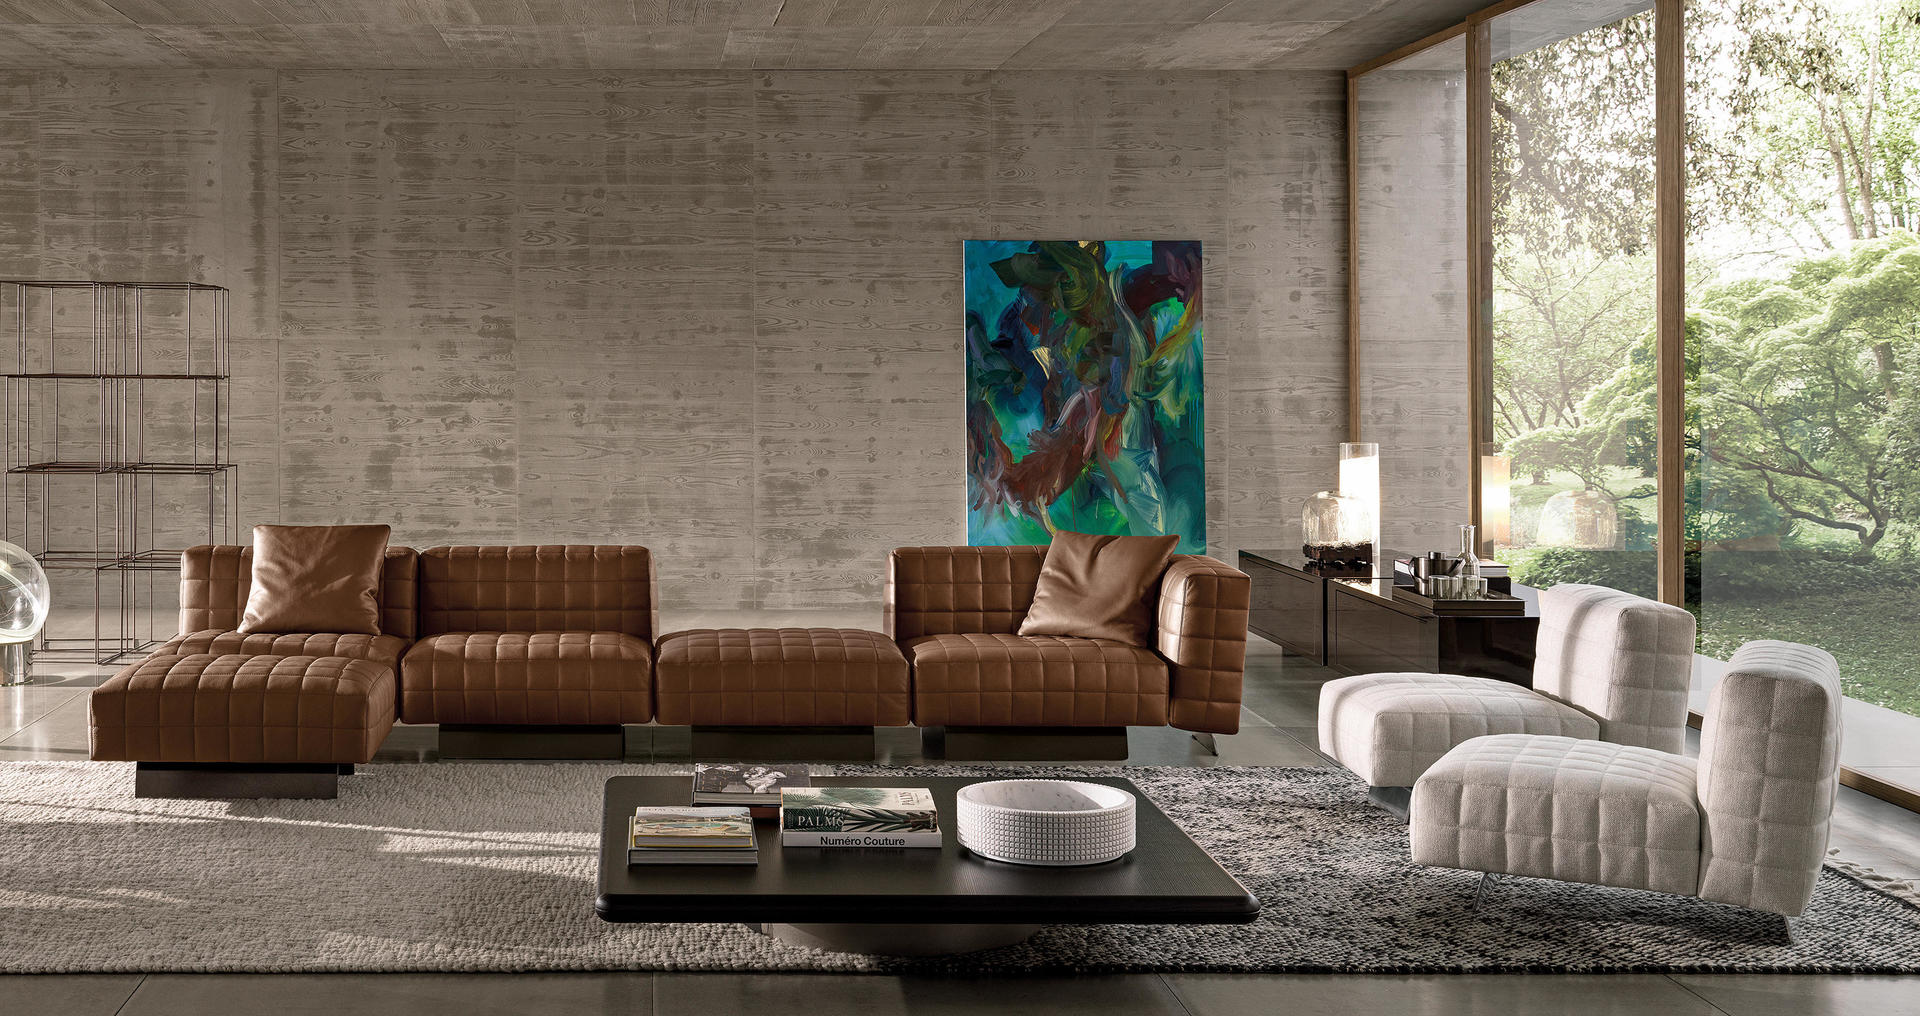 HORA Barneveld Minotti Twiggy bank modulaire sofa design meubelen designmeubelen 6.jpg